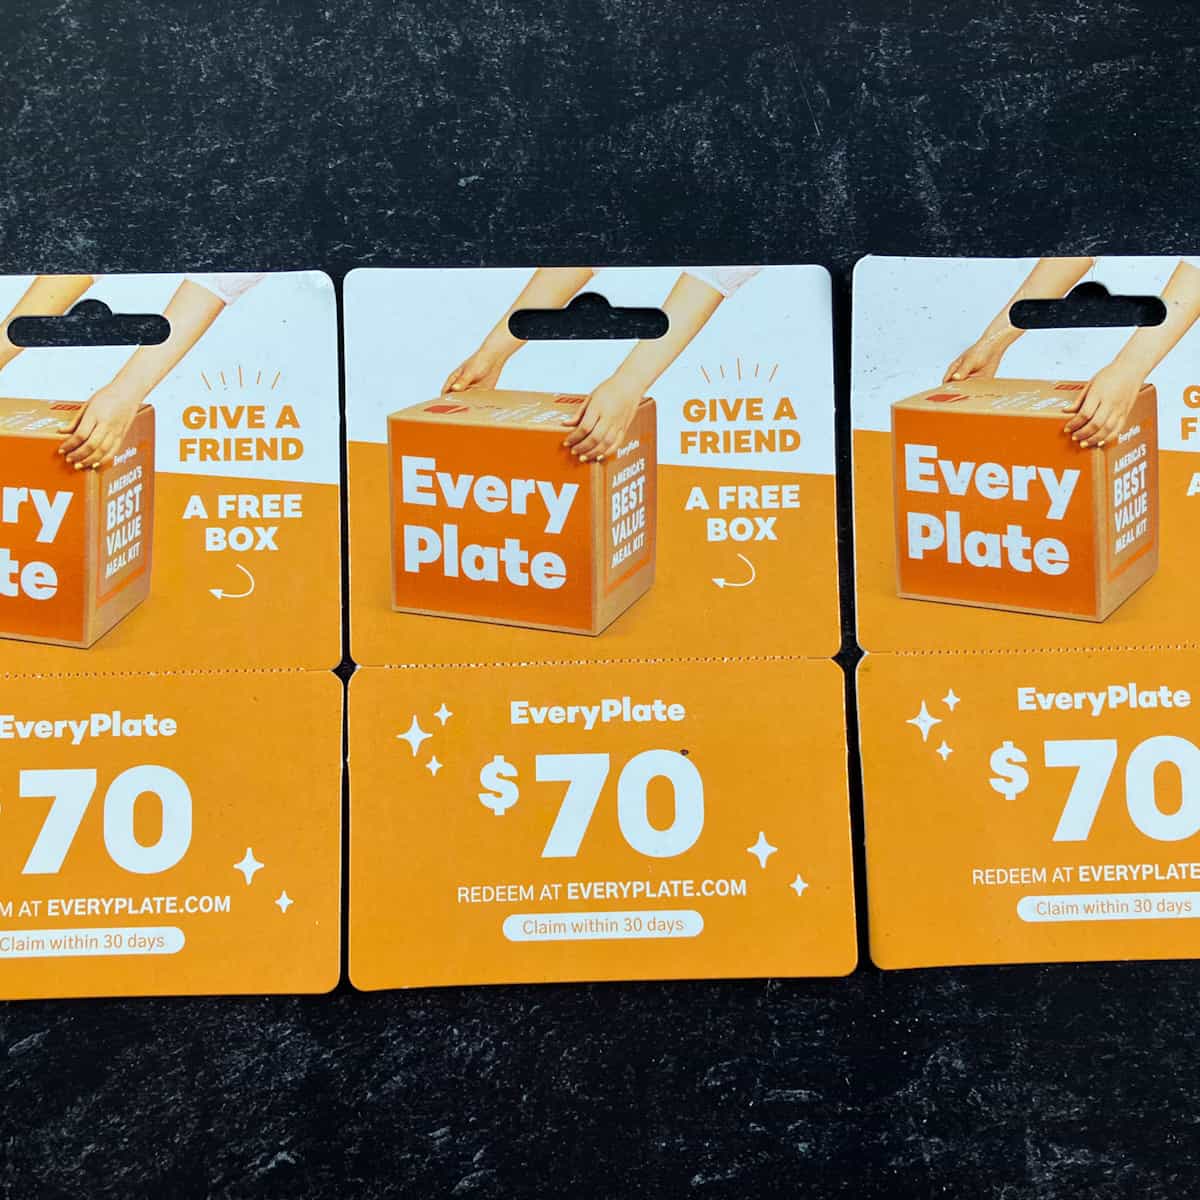 Every Plate free box